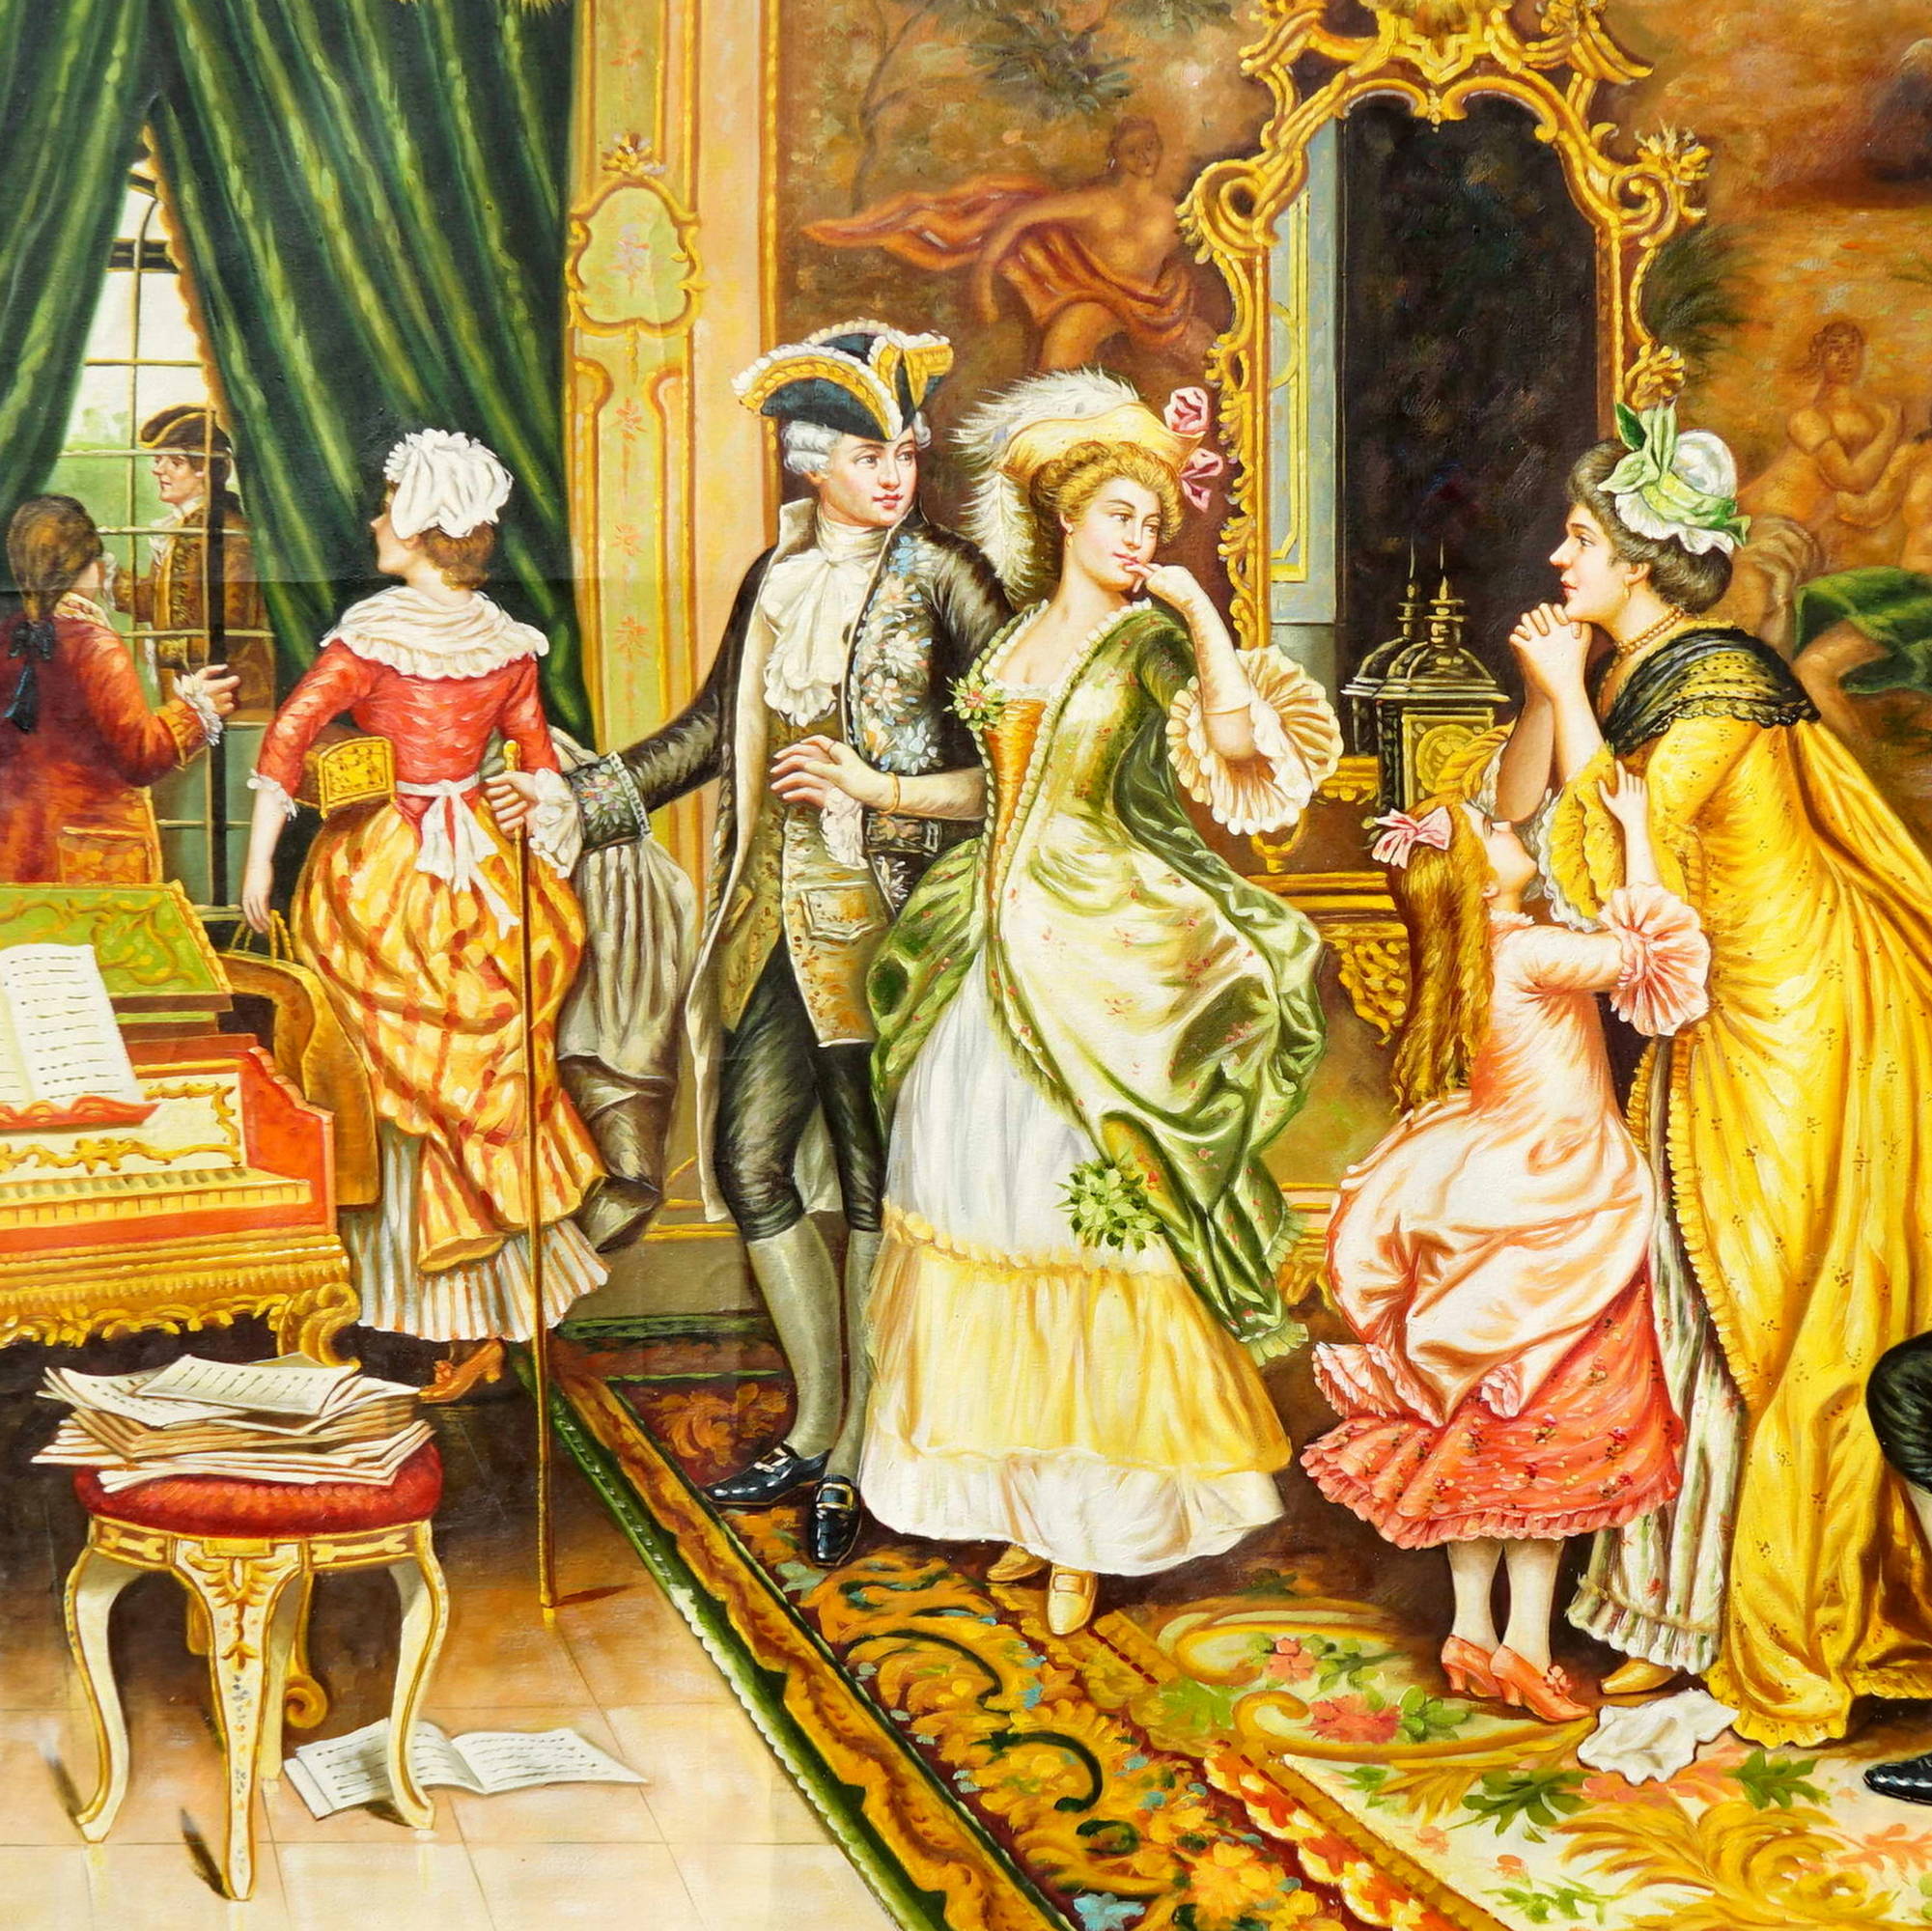 Hand painted Court scene in the eighteenth century 120x180cm